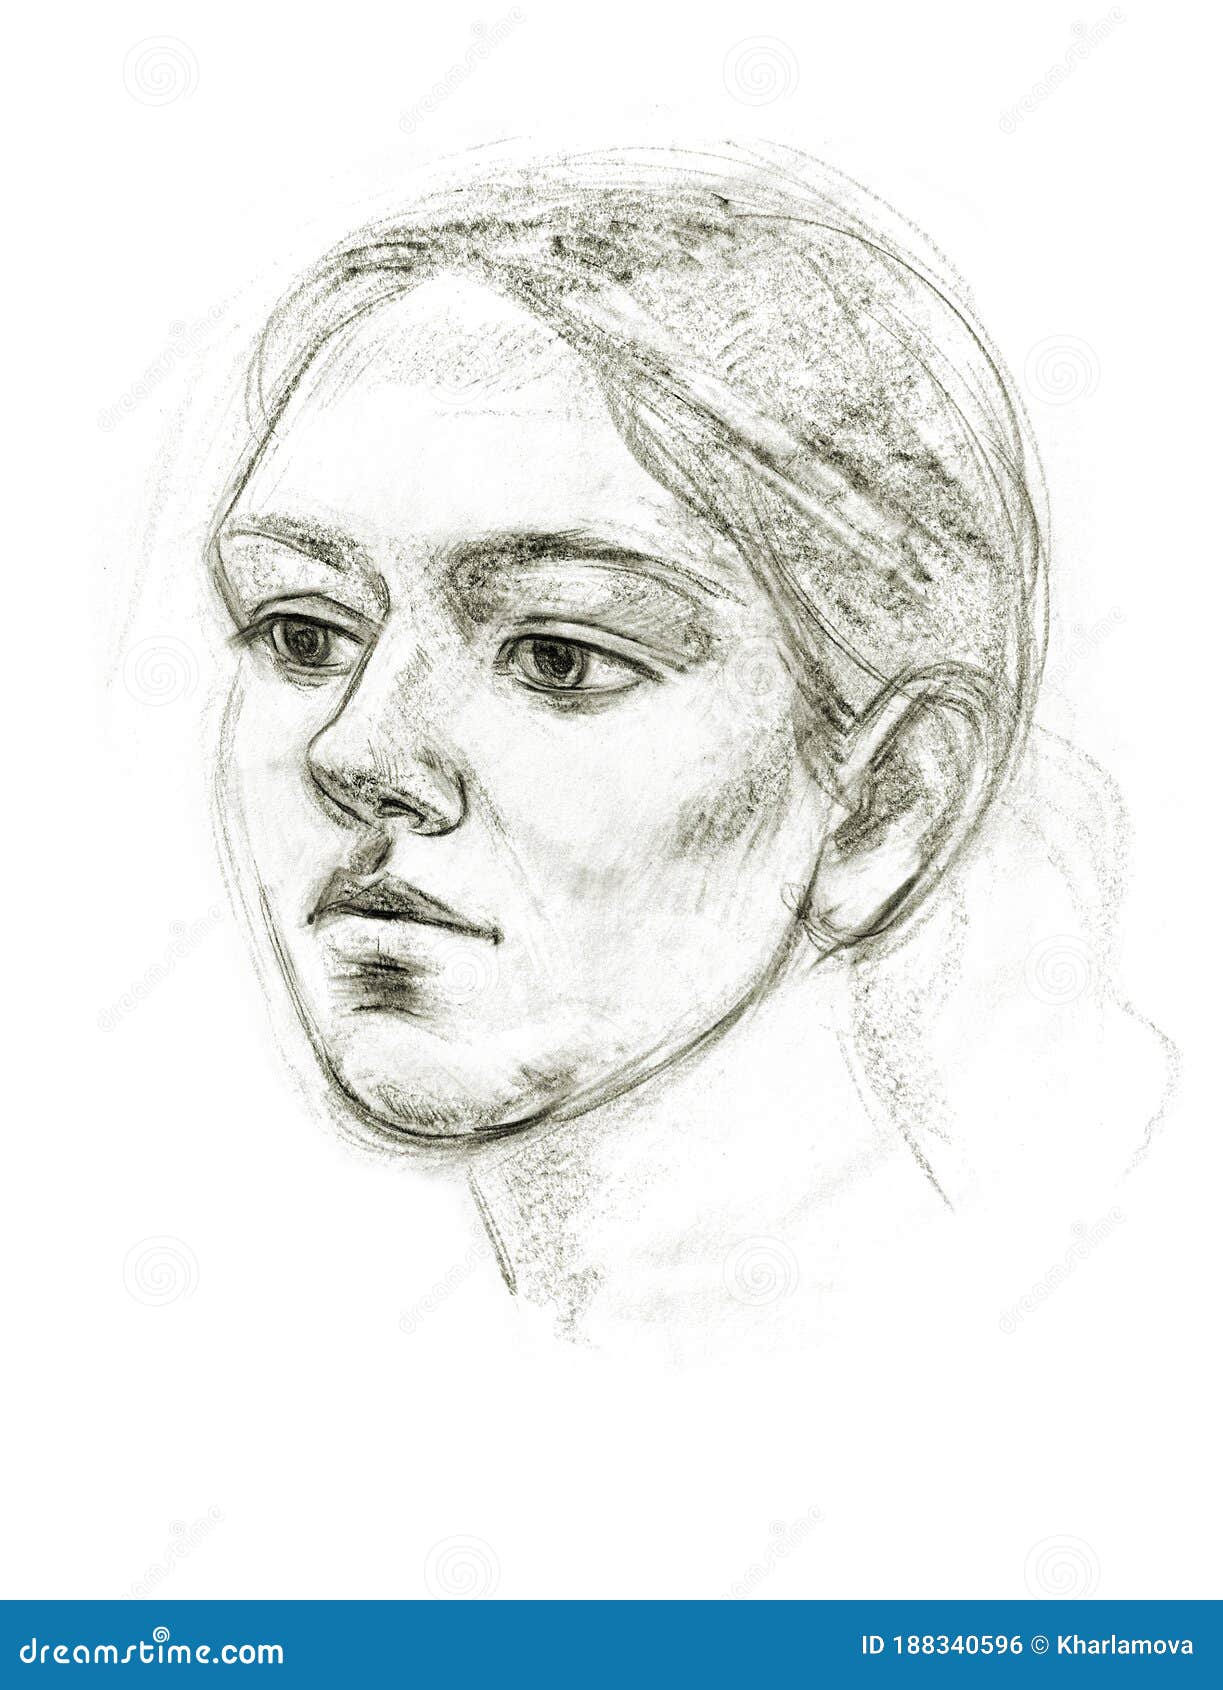 https://thumbs.dreamstime.com/z/portrait-girl-hand-drawing-charcoal-pencil-technique-188340596.jpg